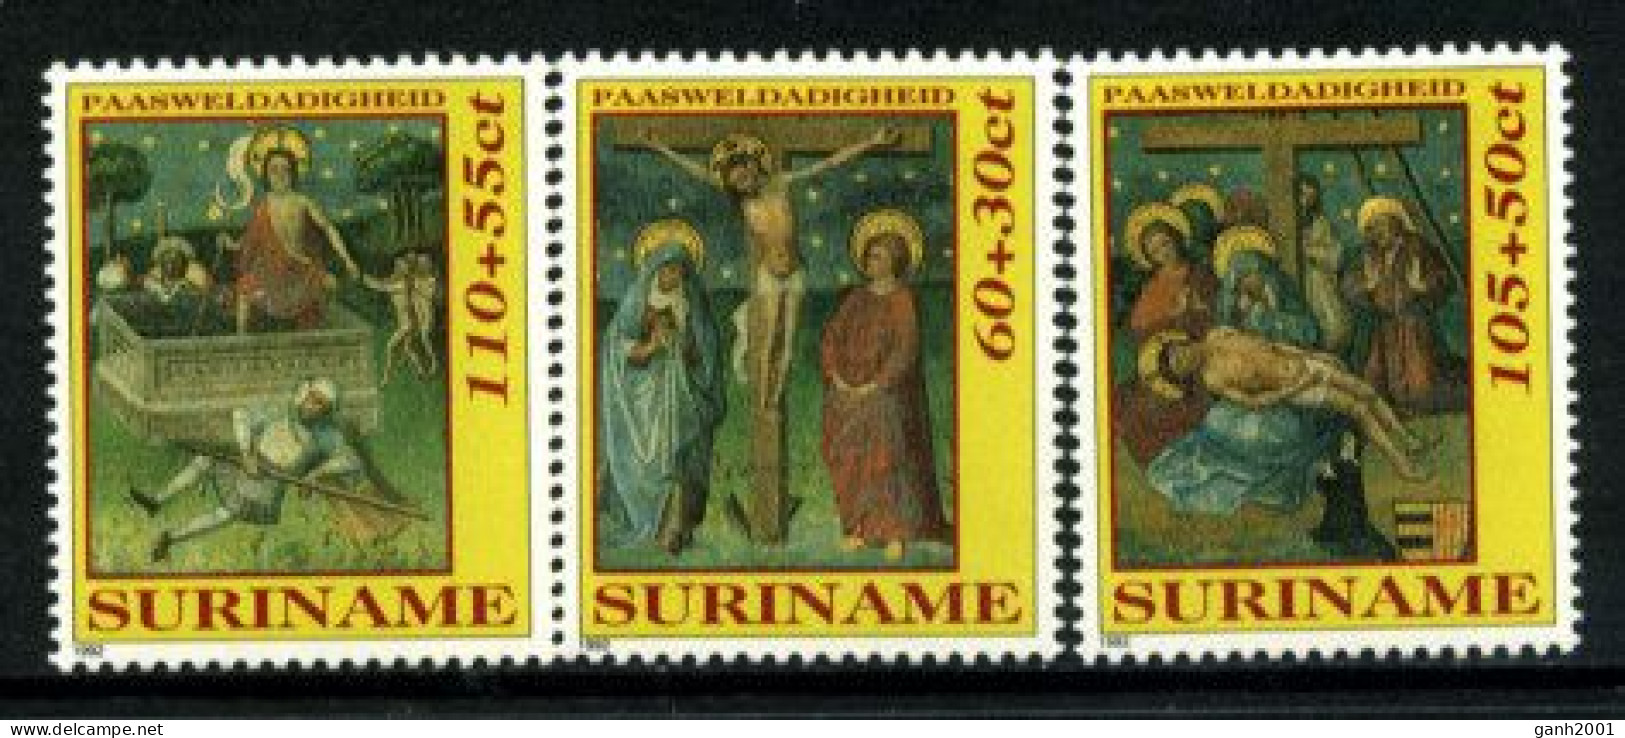 Suriname 1992 / Easter Religious Art MNH Pascuas Arte Religioso Ostern Kunst / 0435  38-33 - Ostern